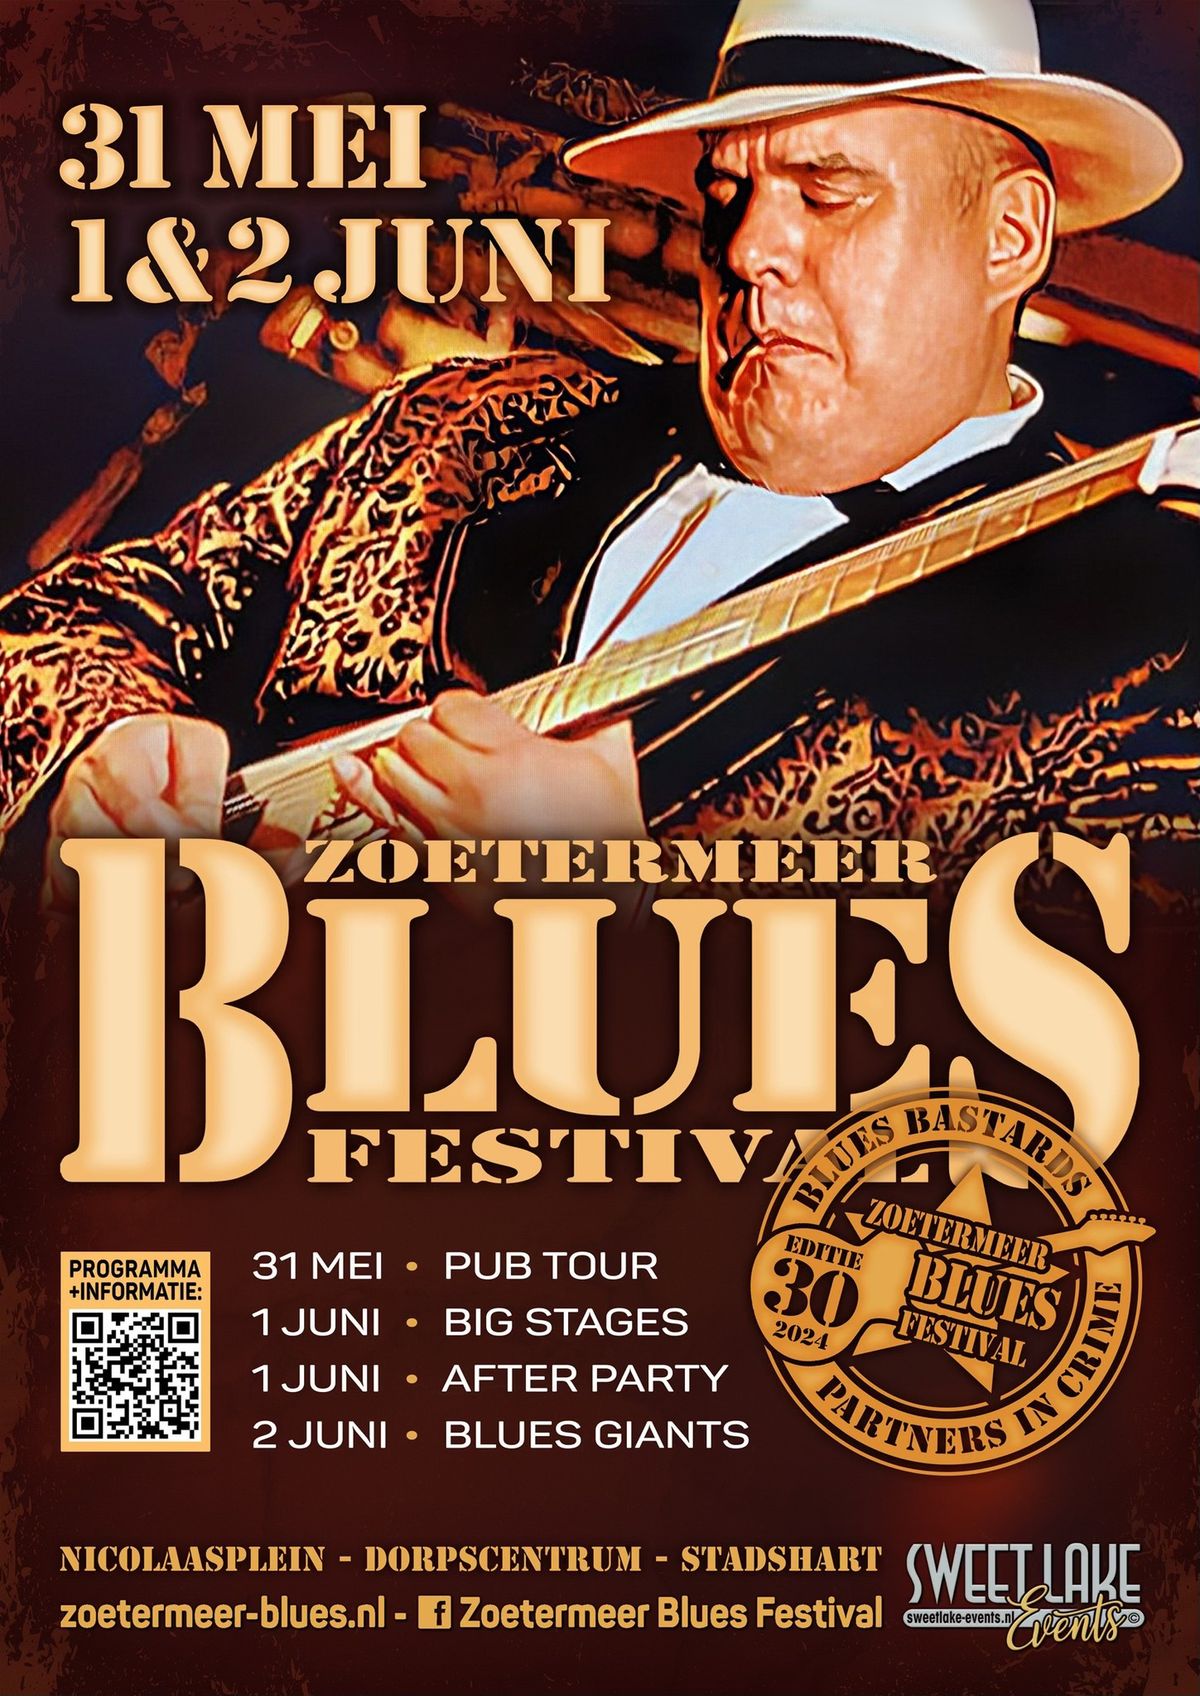 Bluesfestival 1 juni@nicolaasplein